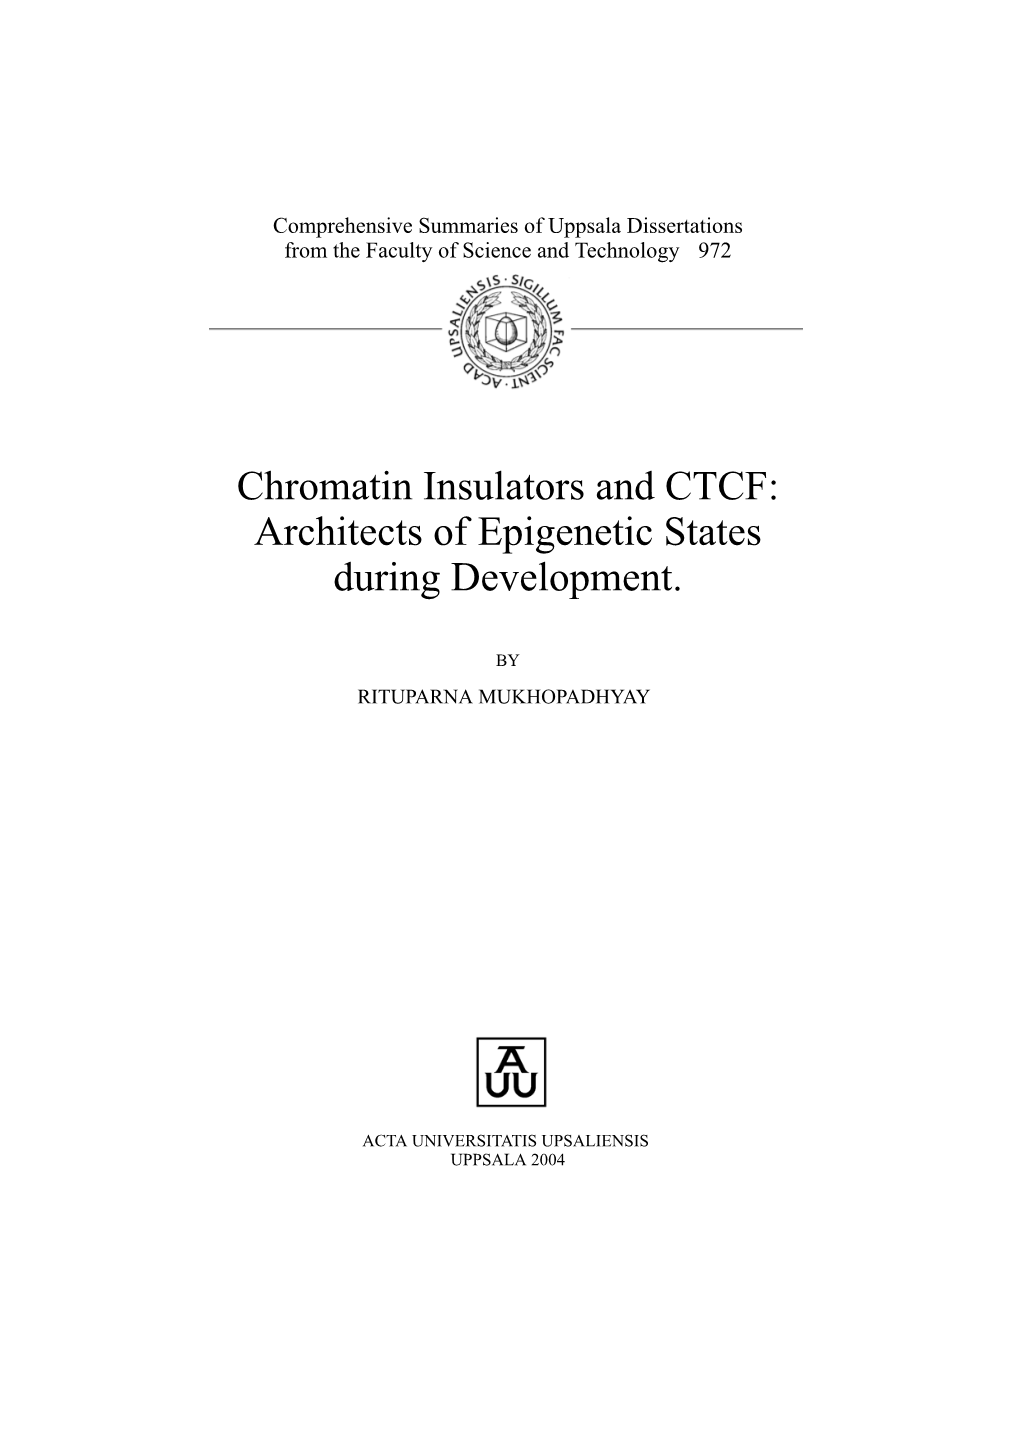 Chromatin Insulators and CTCF: Architects of Epigenetic States During Development